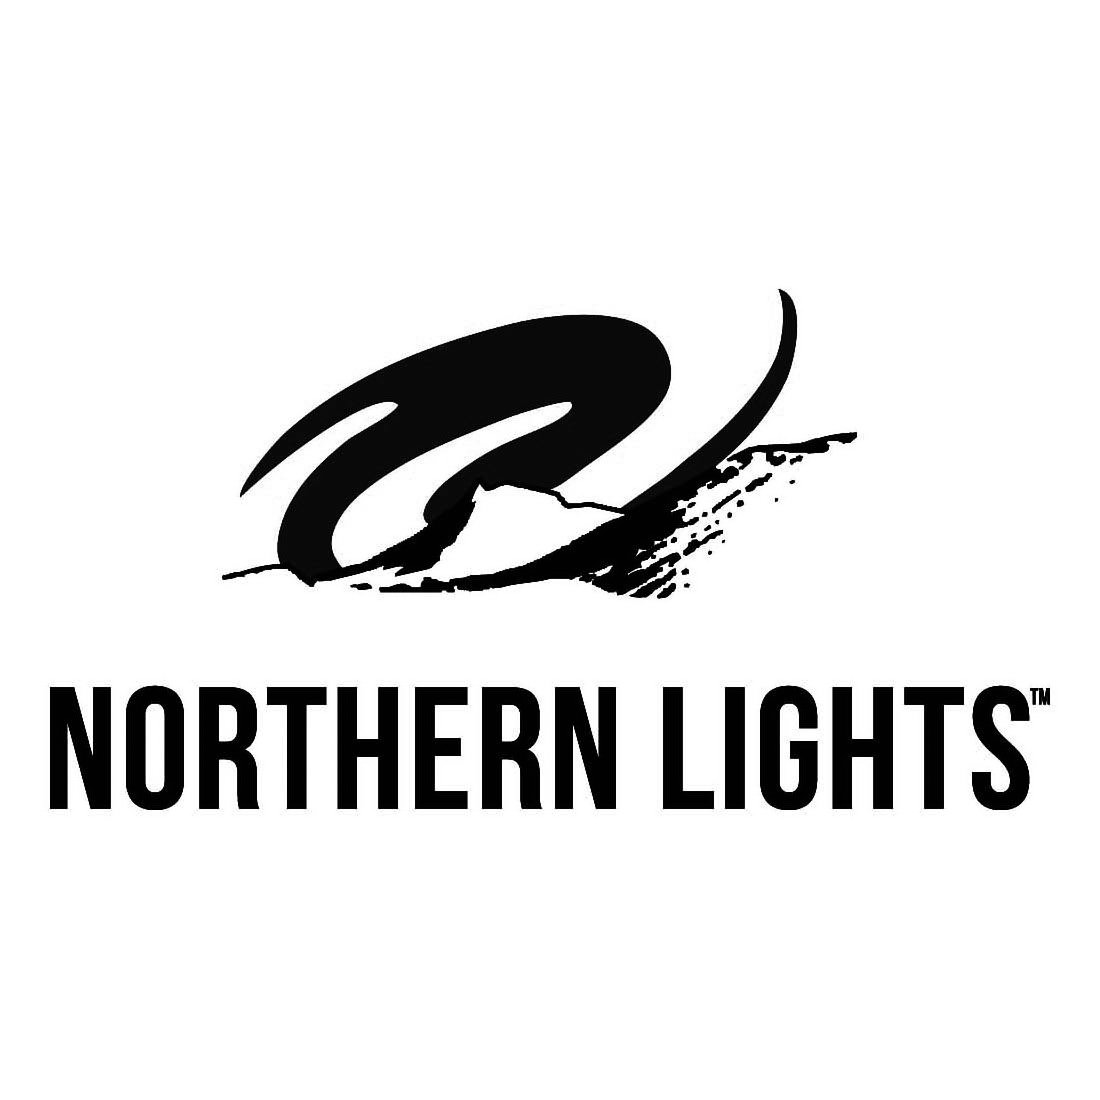 NORTHERN LIGHTS